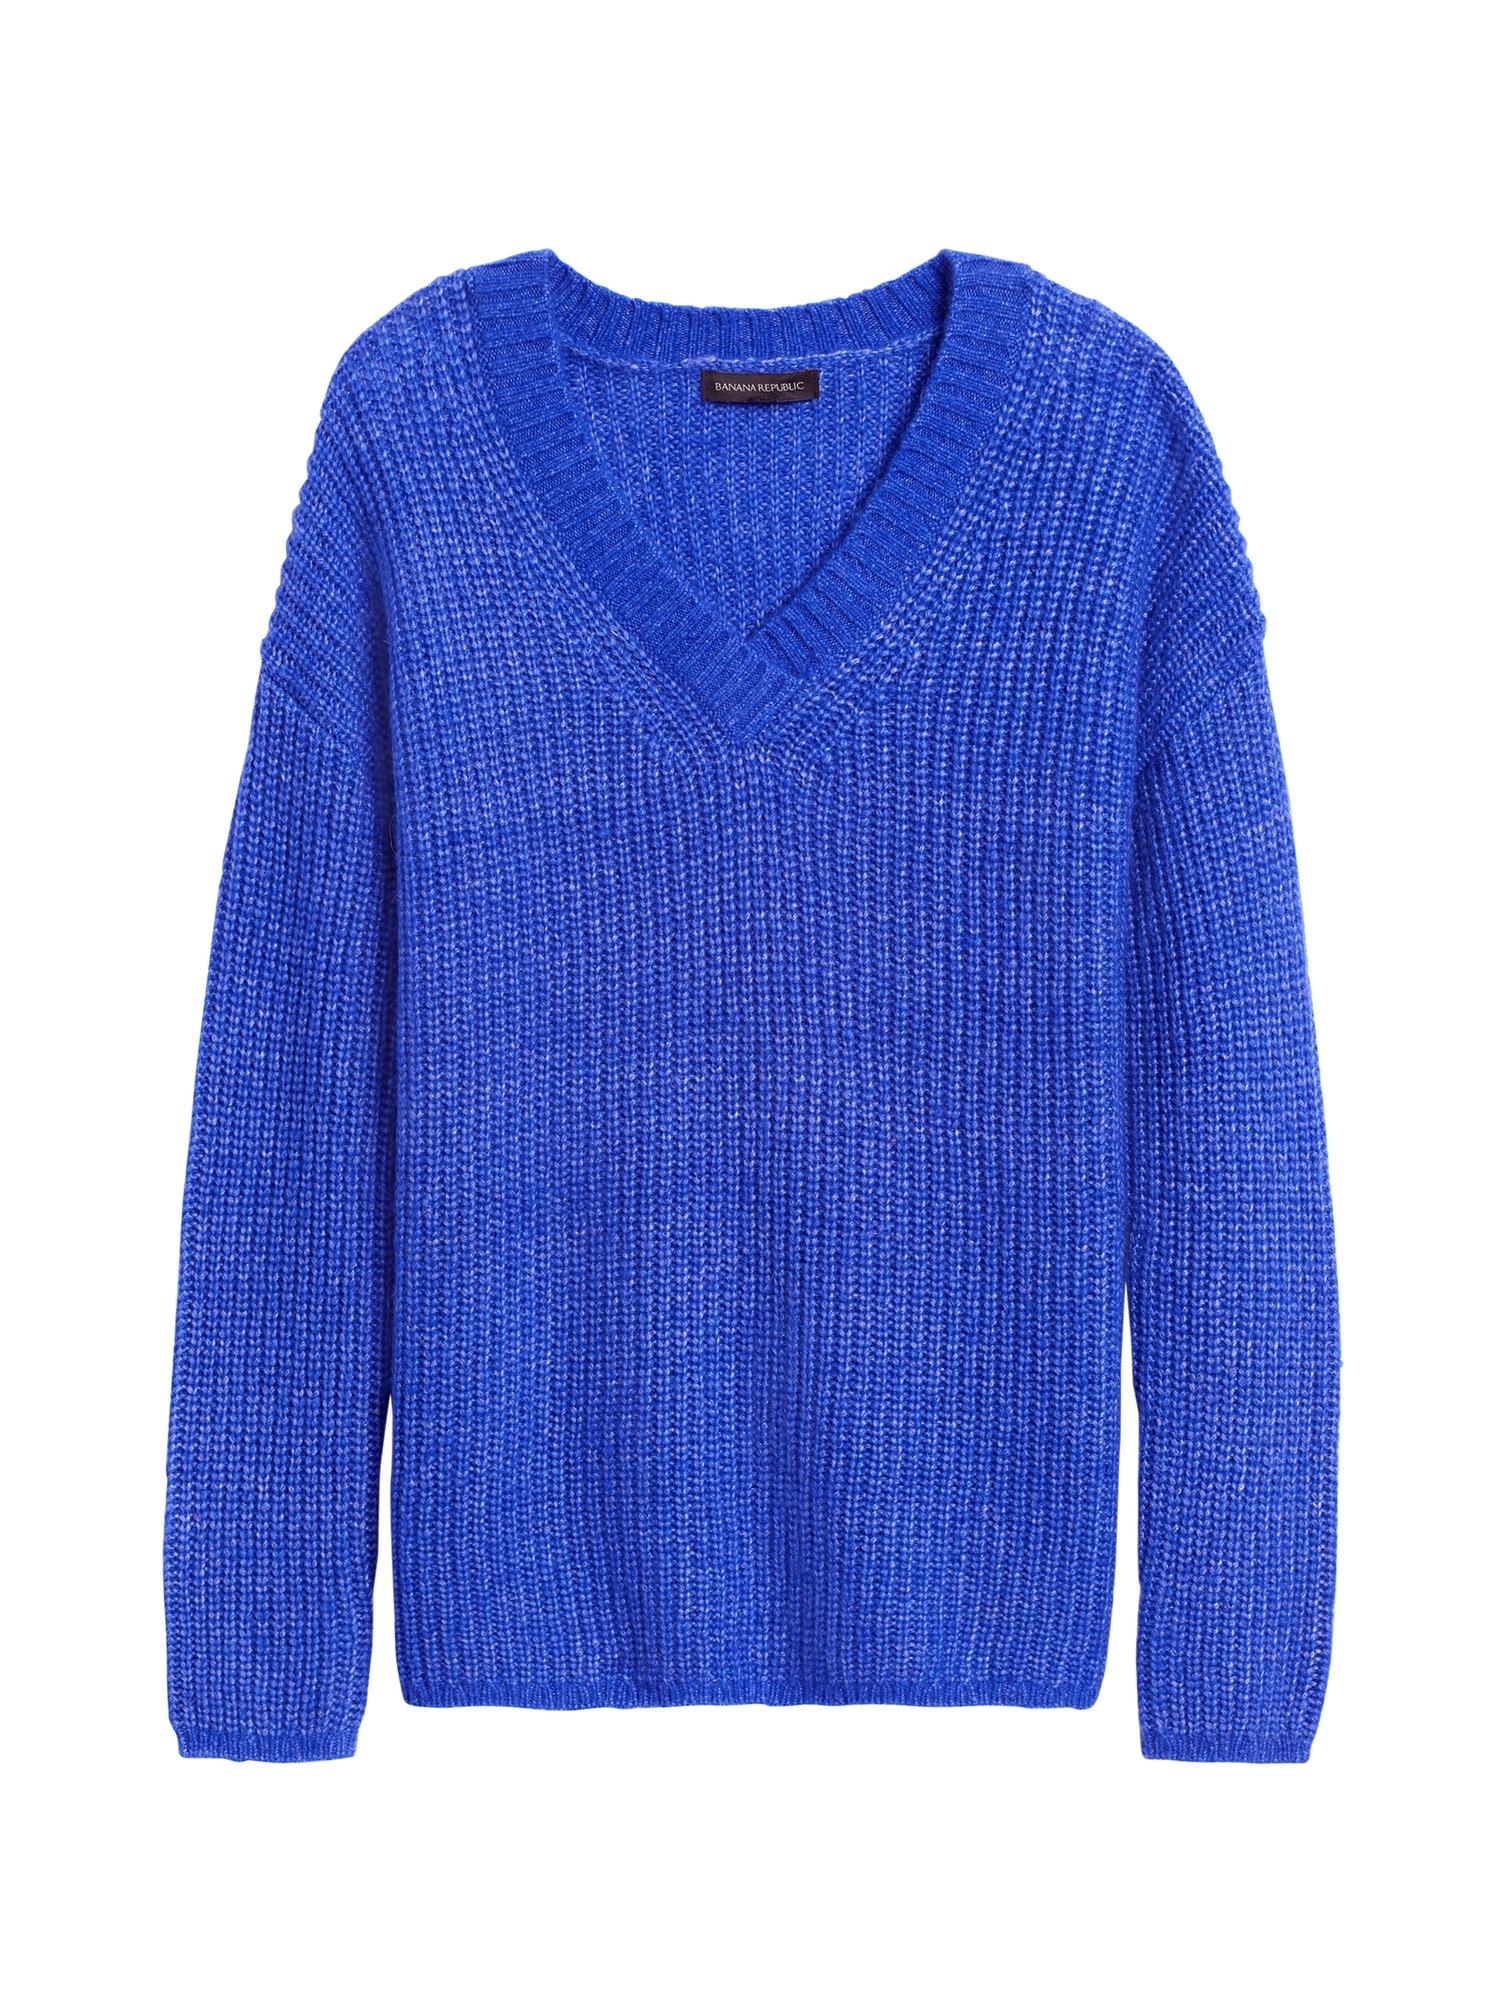 JAPAN EXCLUSIVE Oversized Merino-Blend Sweater